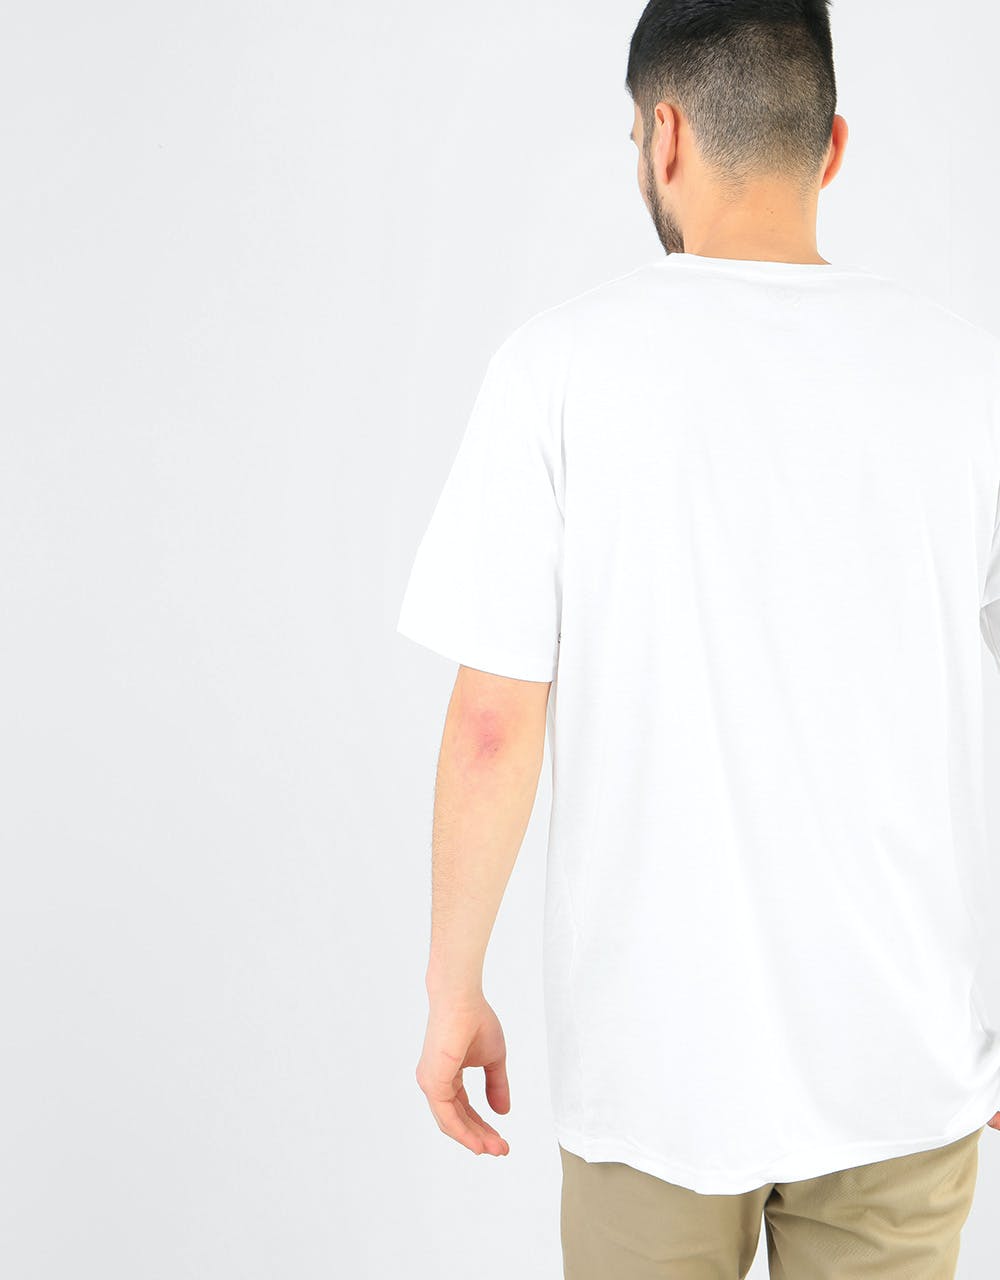 Volcom Stone Blank T-Shirt - White